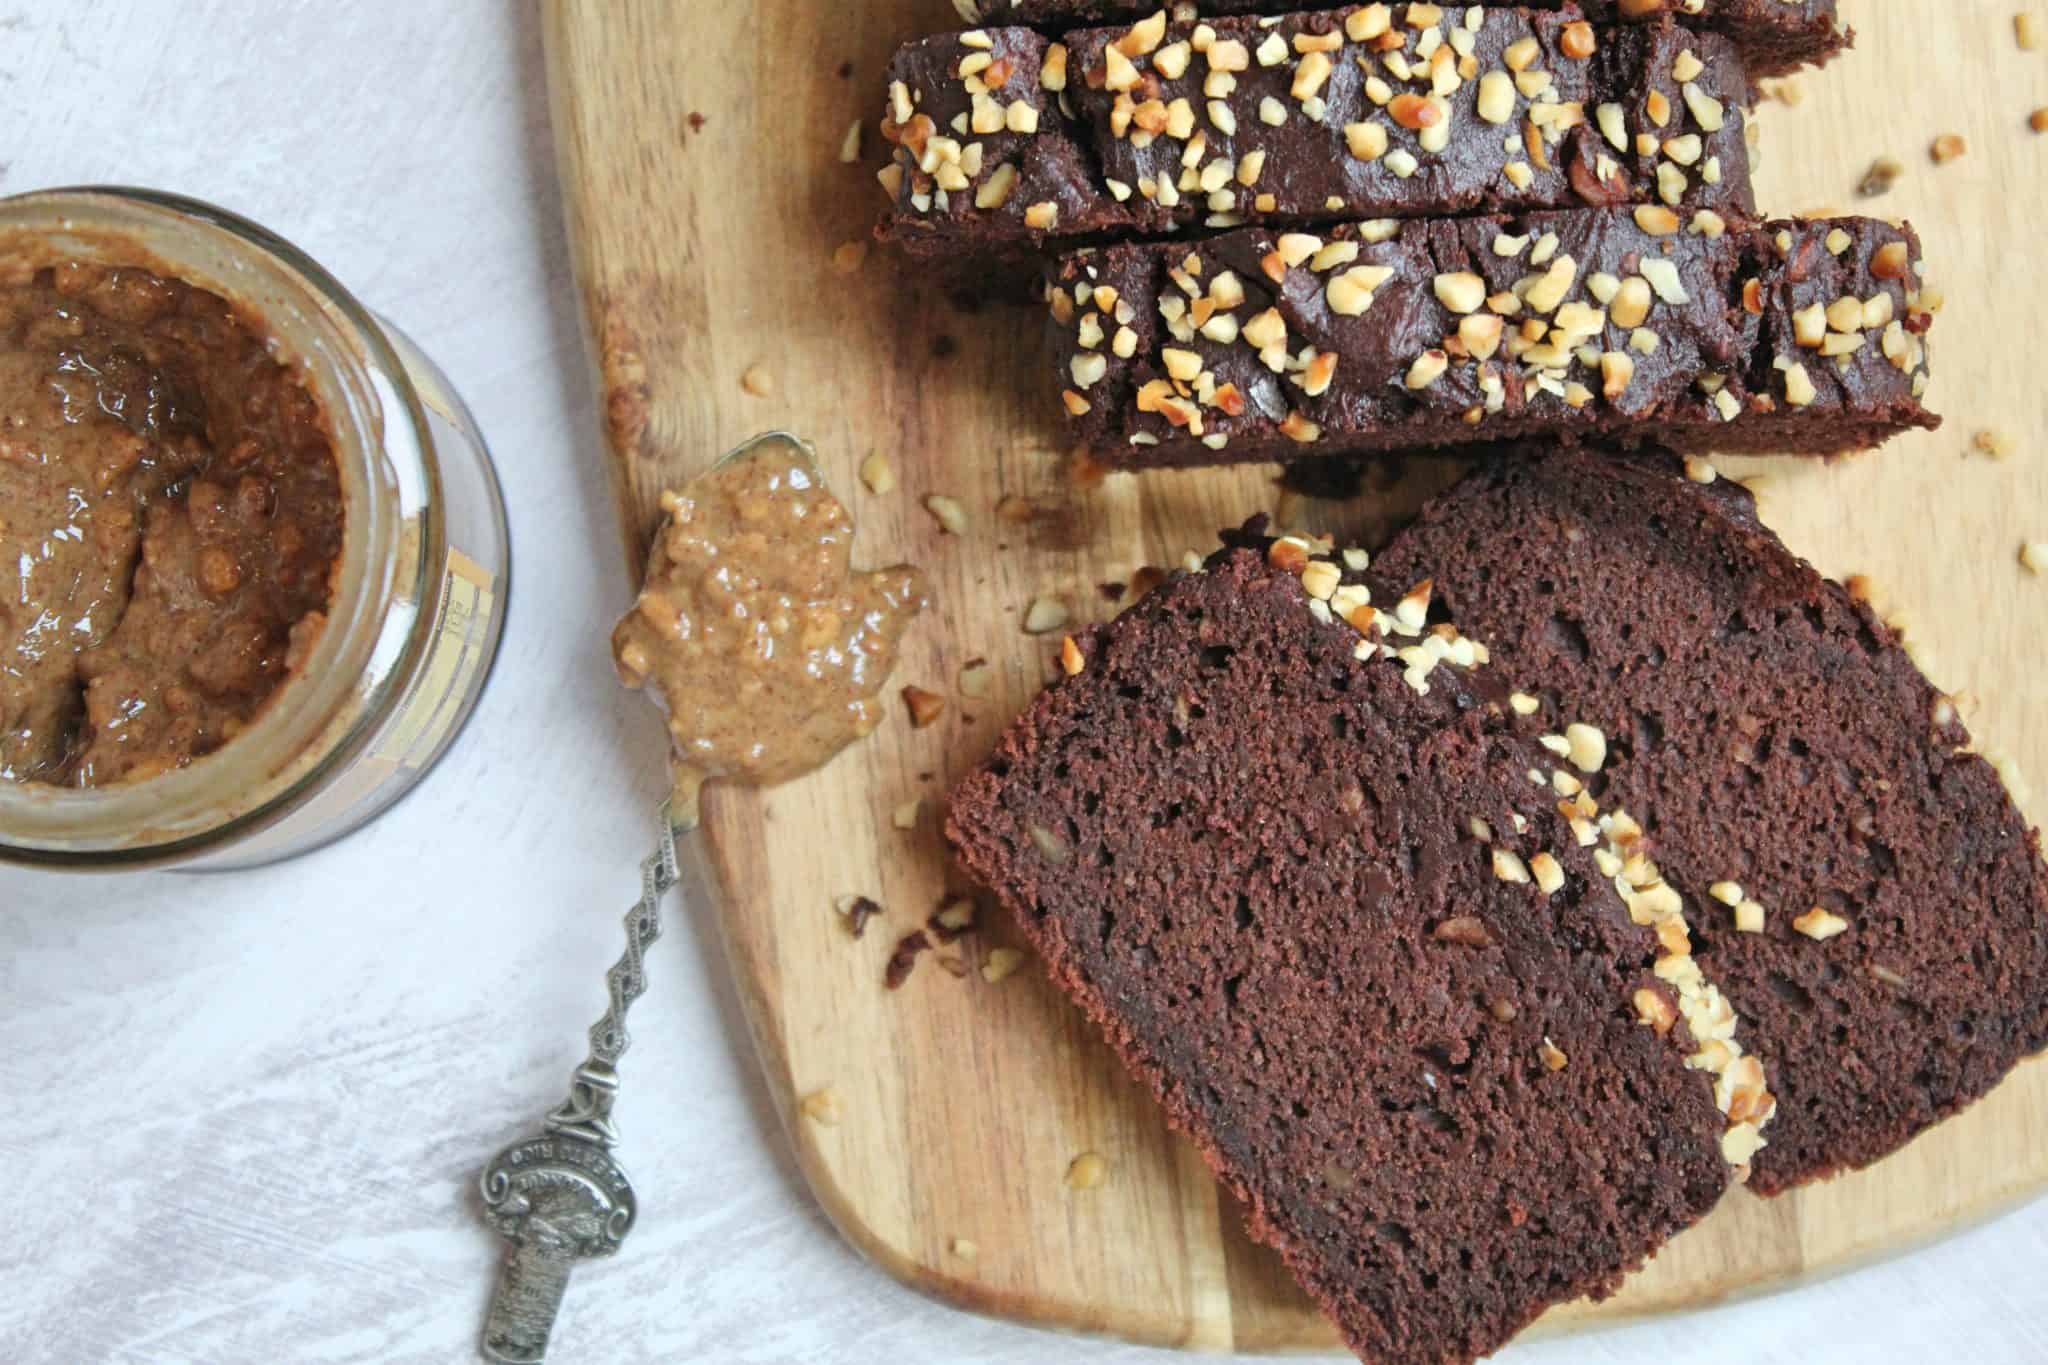 Banana and chocolate loaf cake recipe (Gluten free, dairy free and vegan)